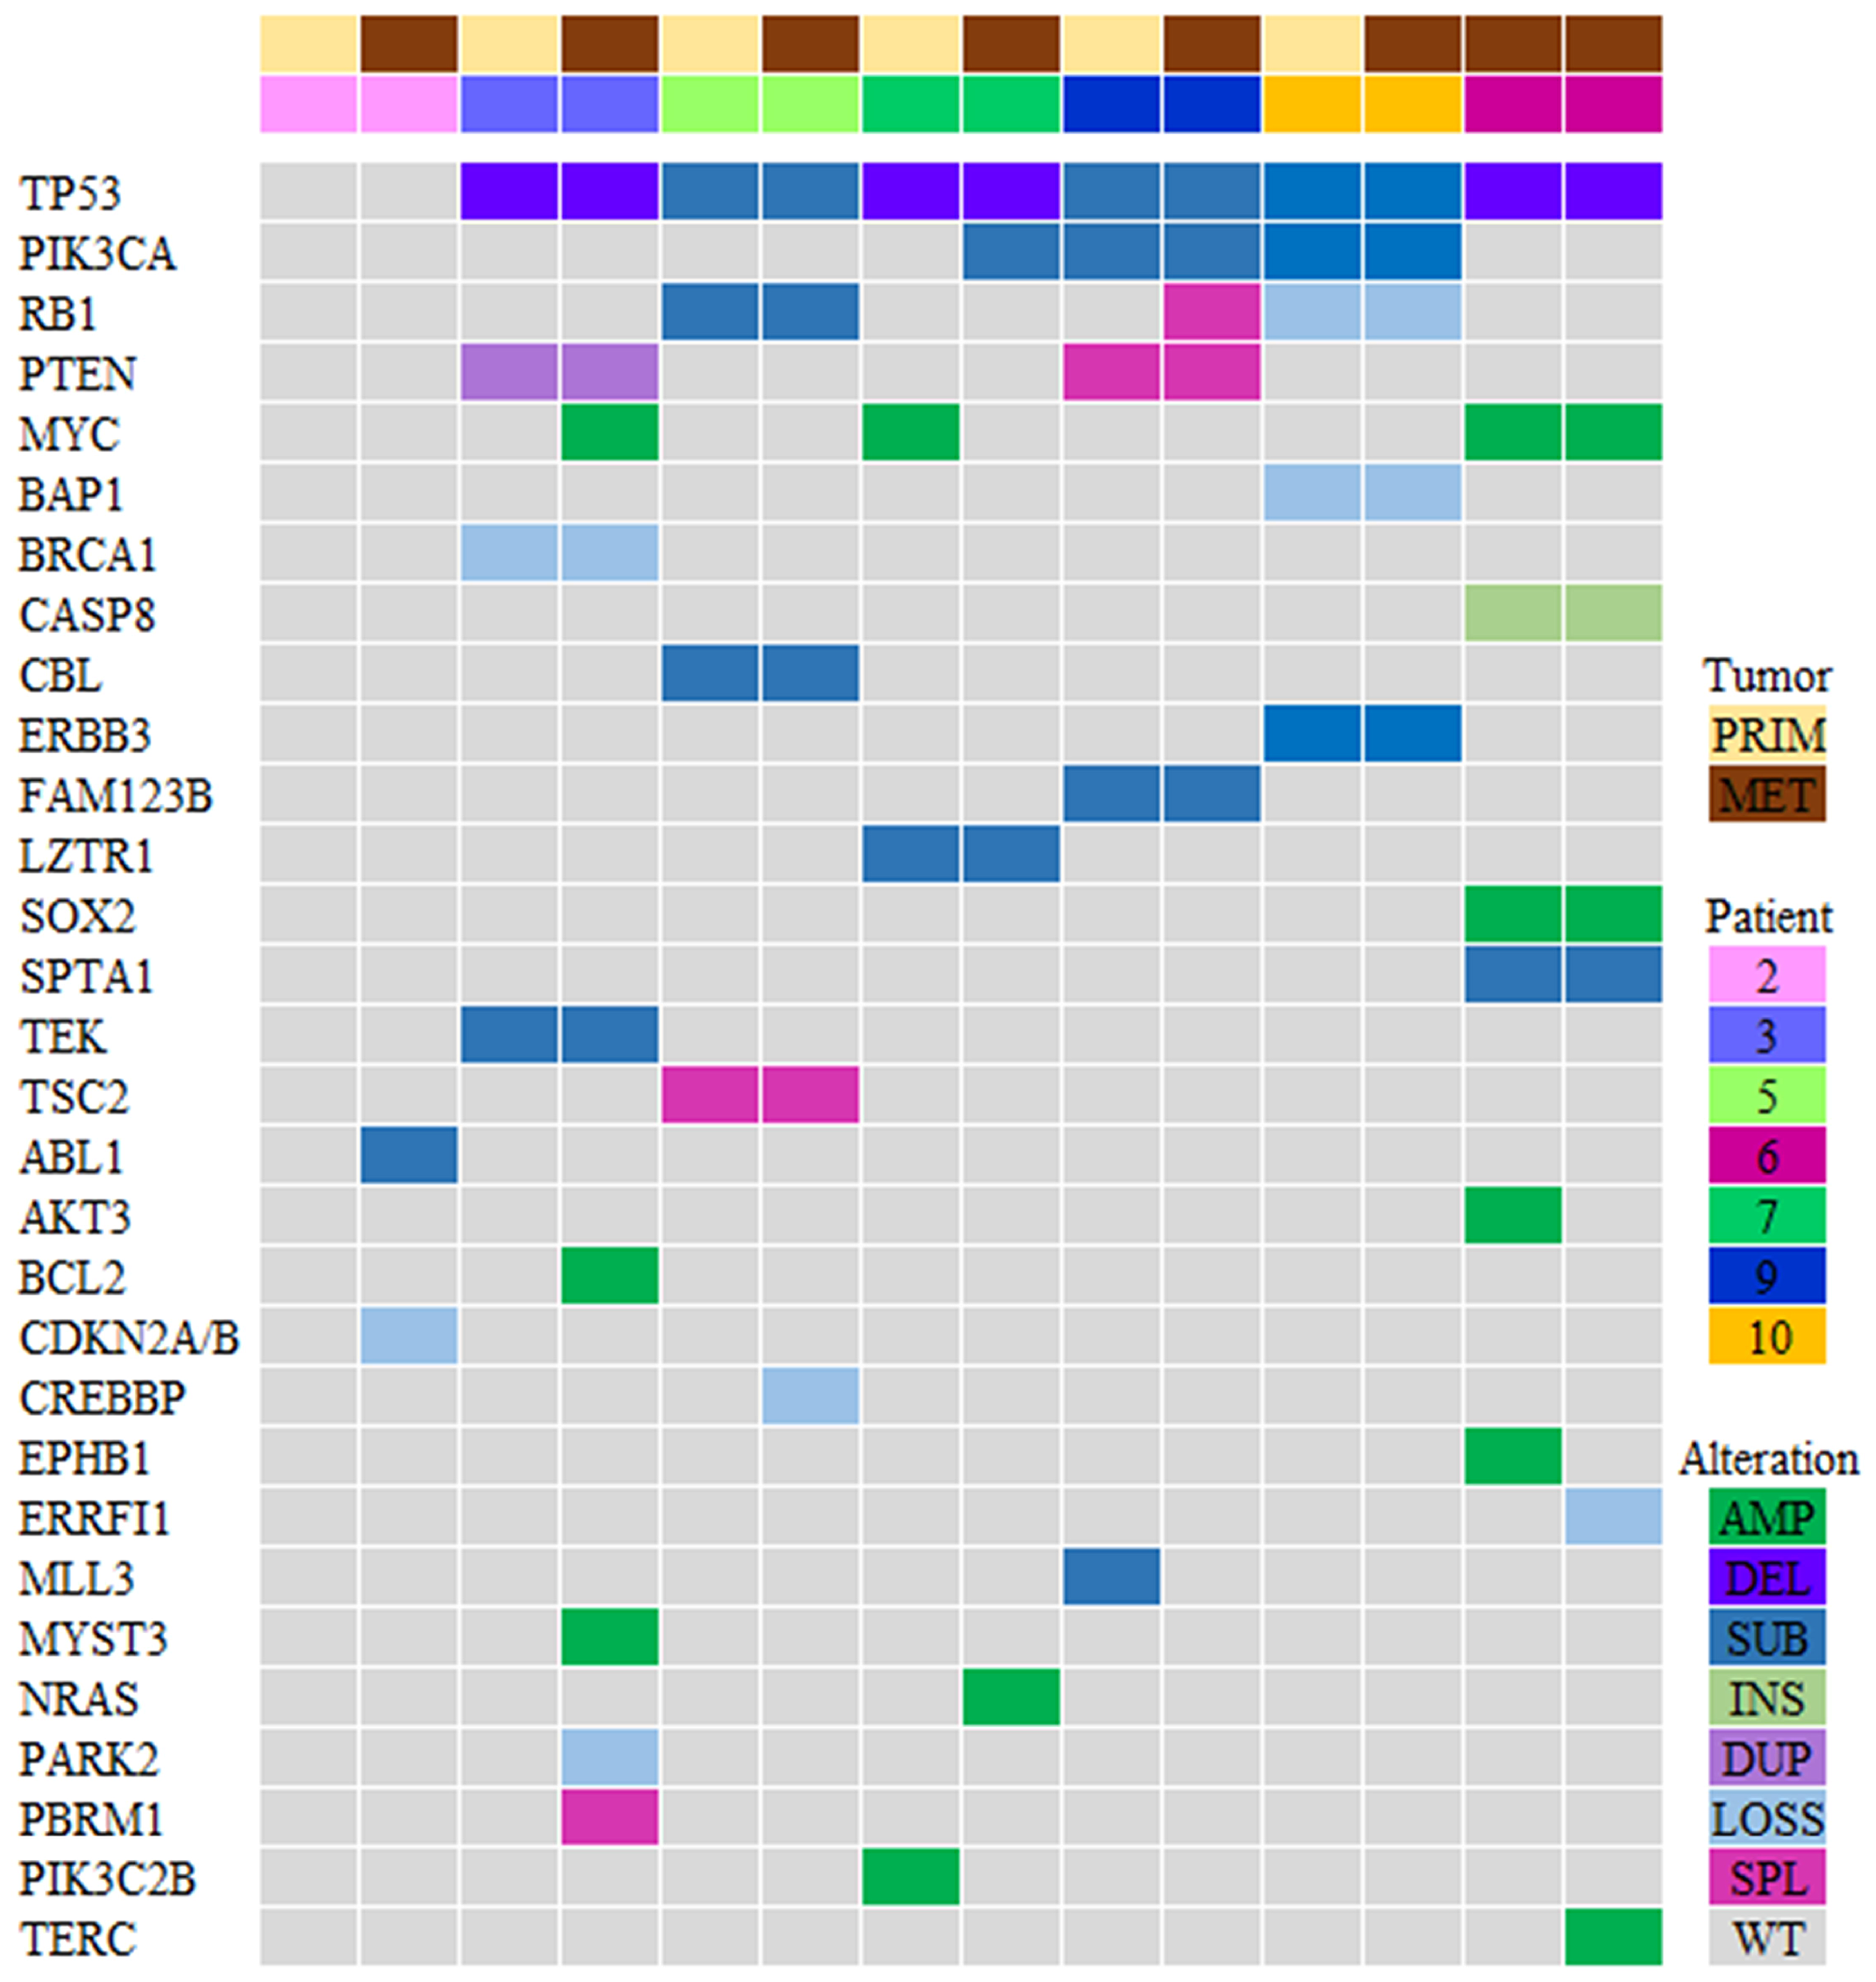 Genomic profiling of the PI3K pathway genes in TNBC (N = 7 patients).